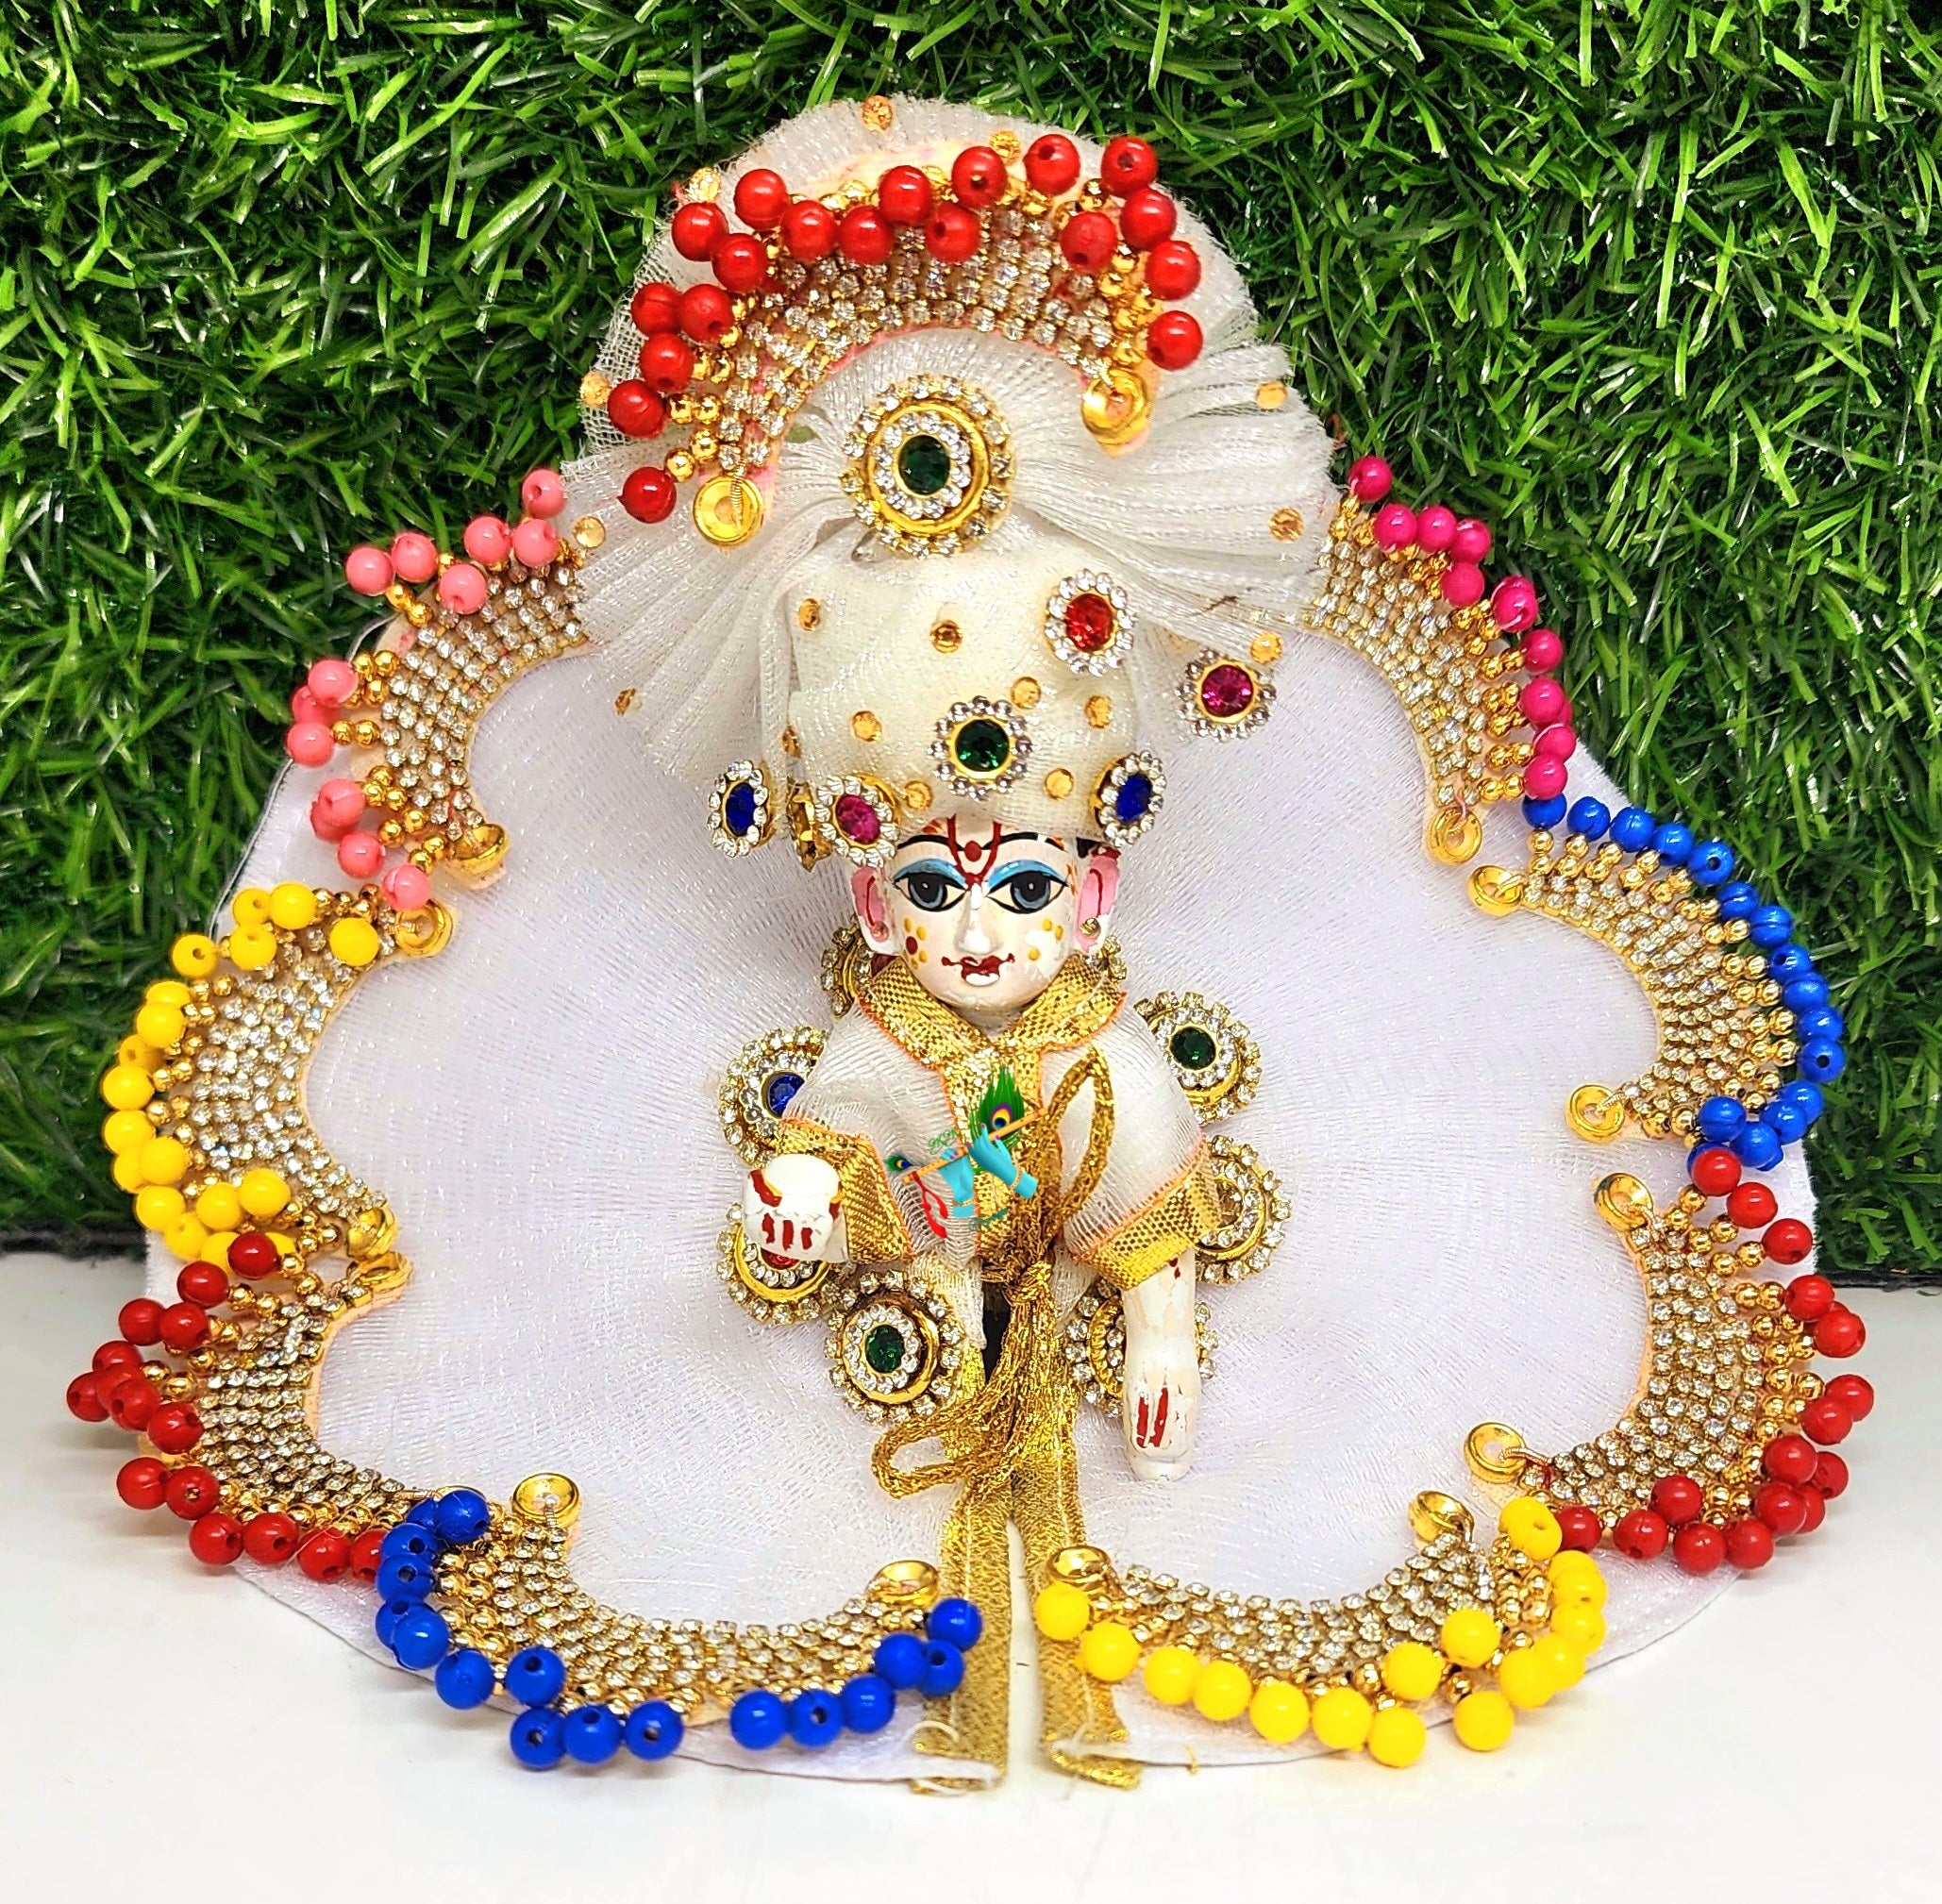 Handmade Fabric Laddu Gopal JI Poshak Morpankh Peacock Feather Dress Size:  1 US | eBay